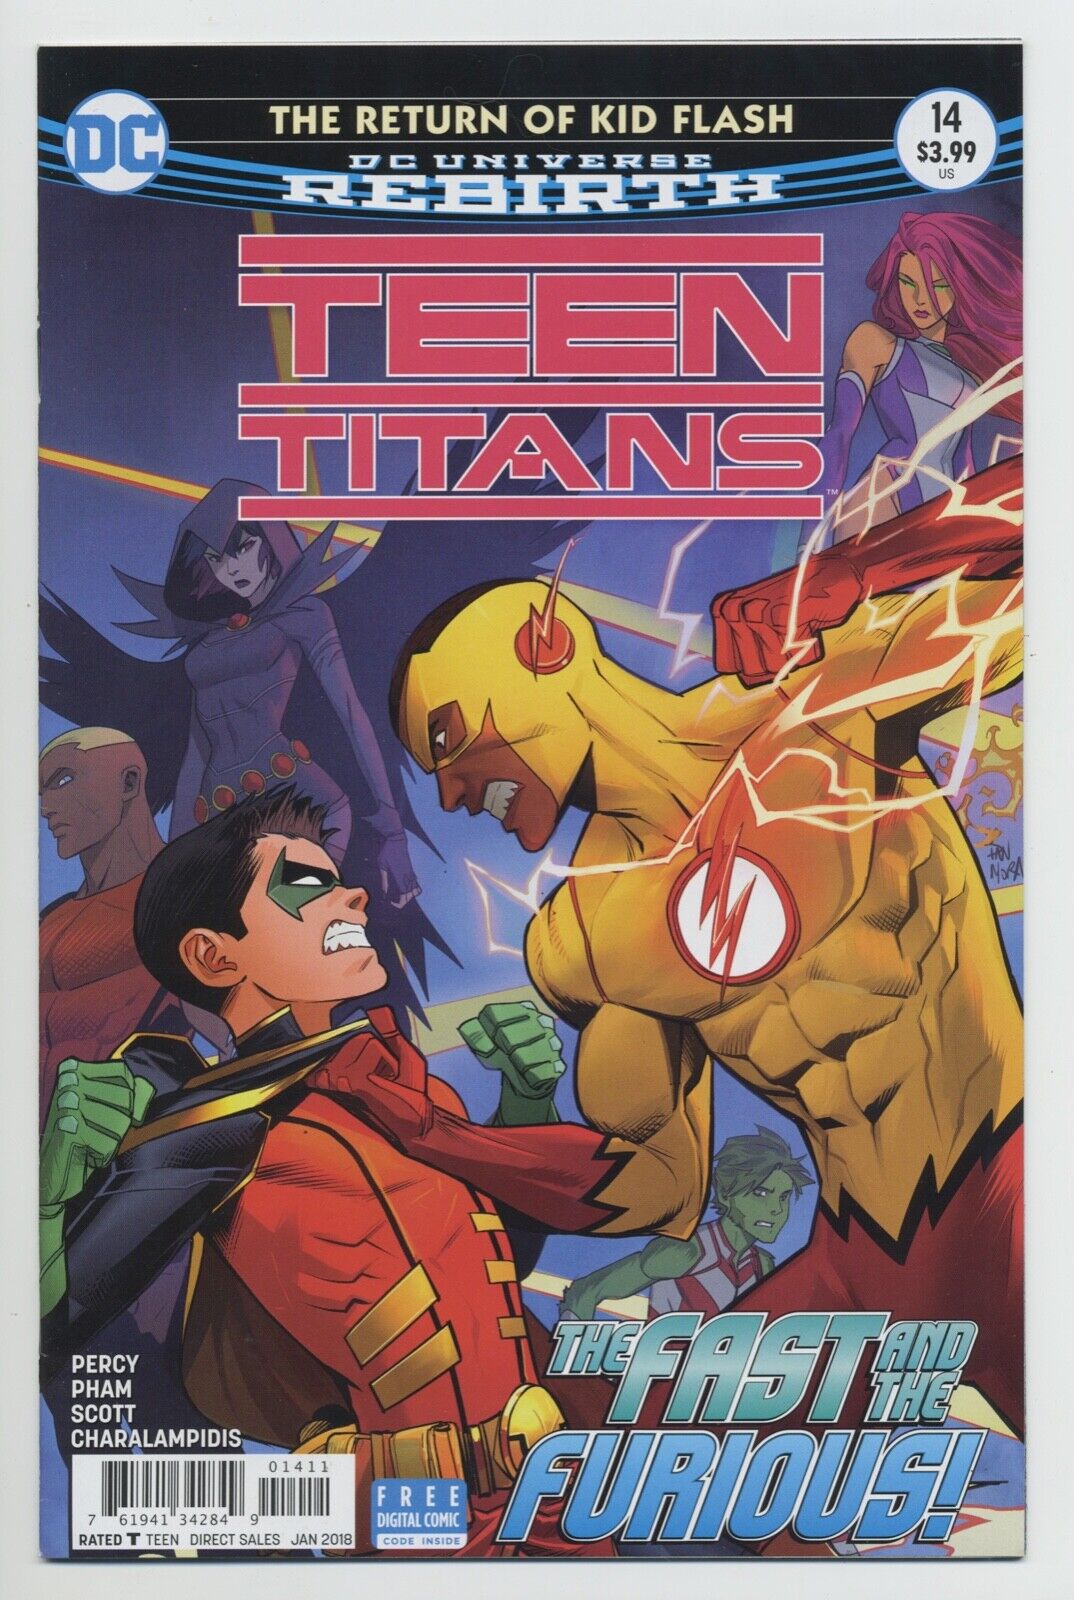 CLEARANCE BIN: TEEN TITANS NIGHTWING  VG DC comics sold SEPARATELY BIN 1121